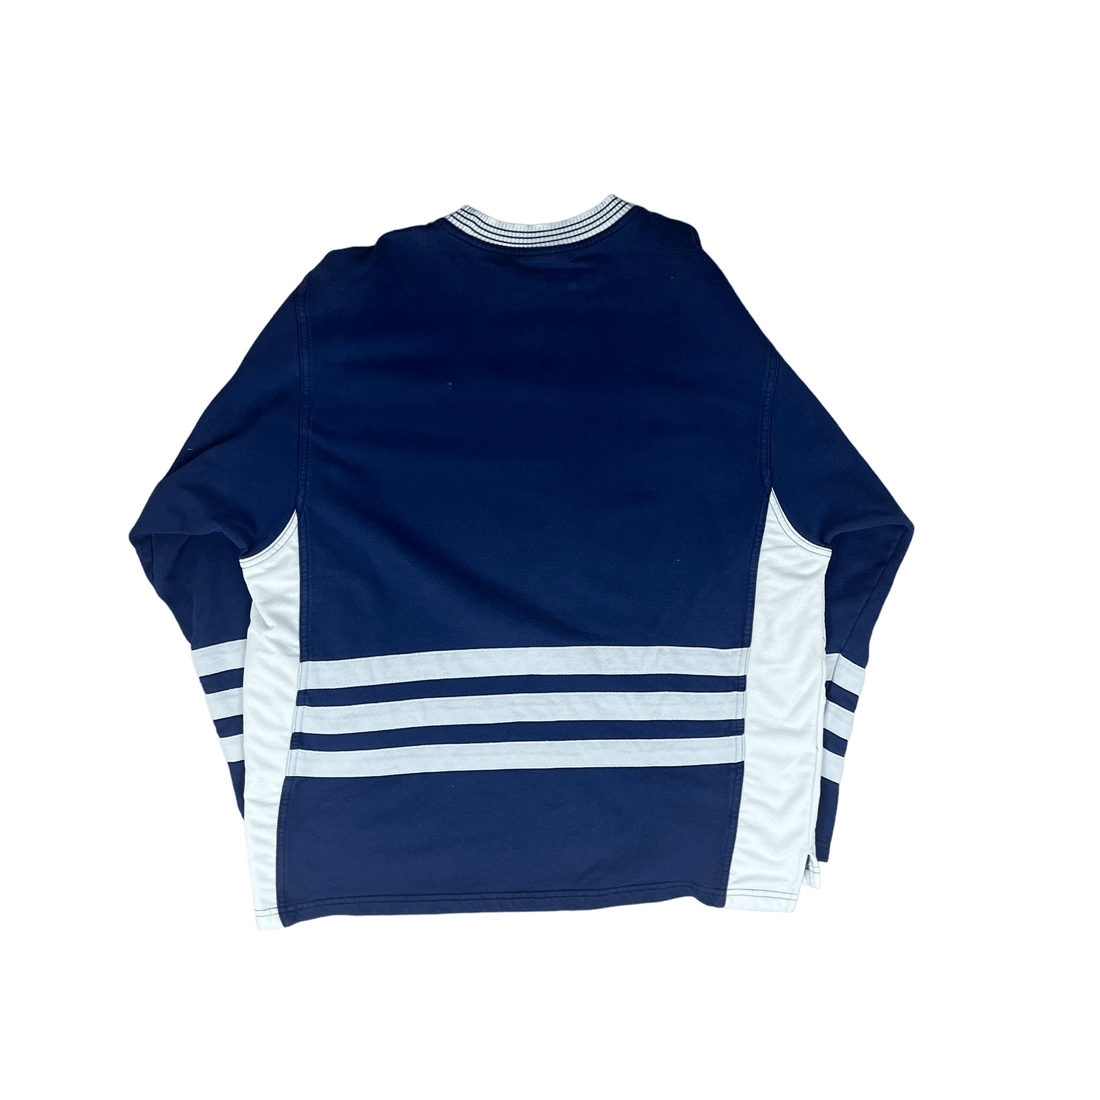 Vintage 90s Adidas Large Logo + Spell-Out Sweatshirt - Medium - The Streetwear Studio